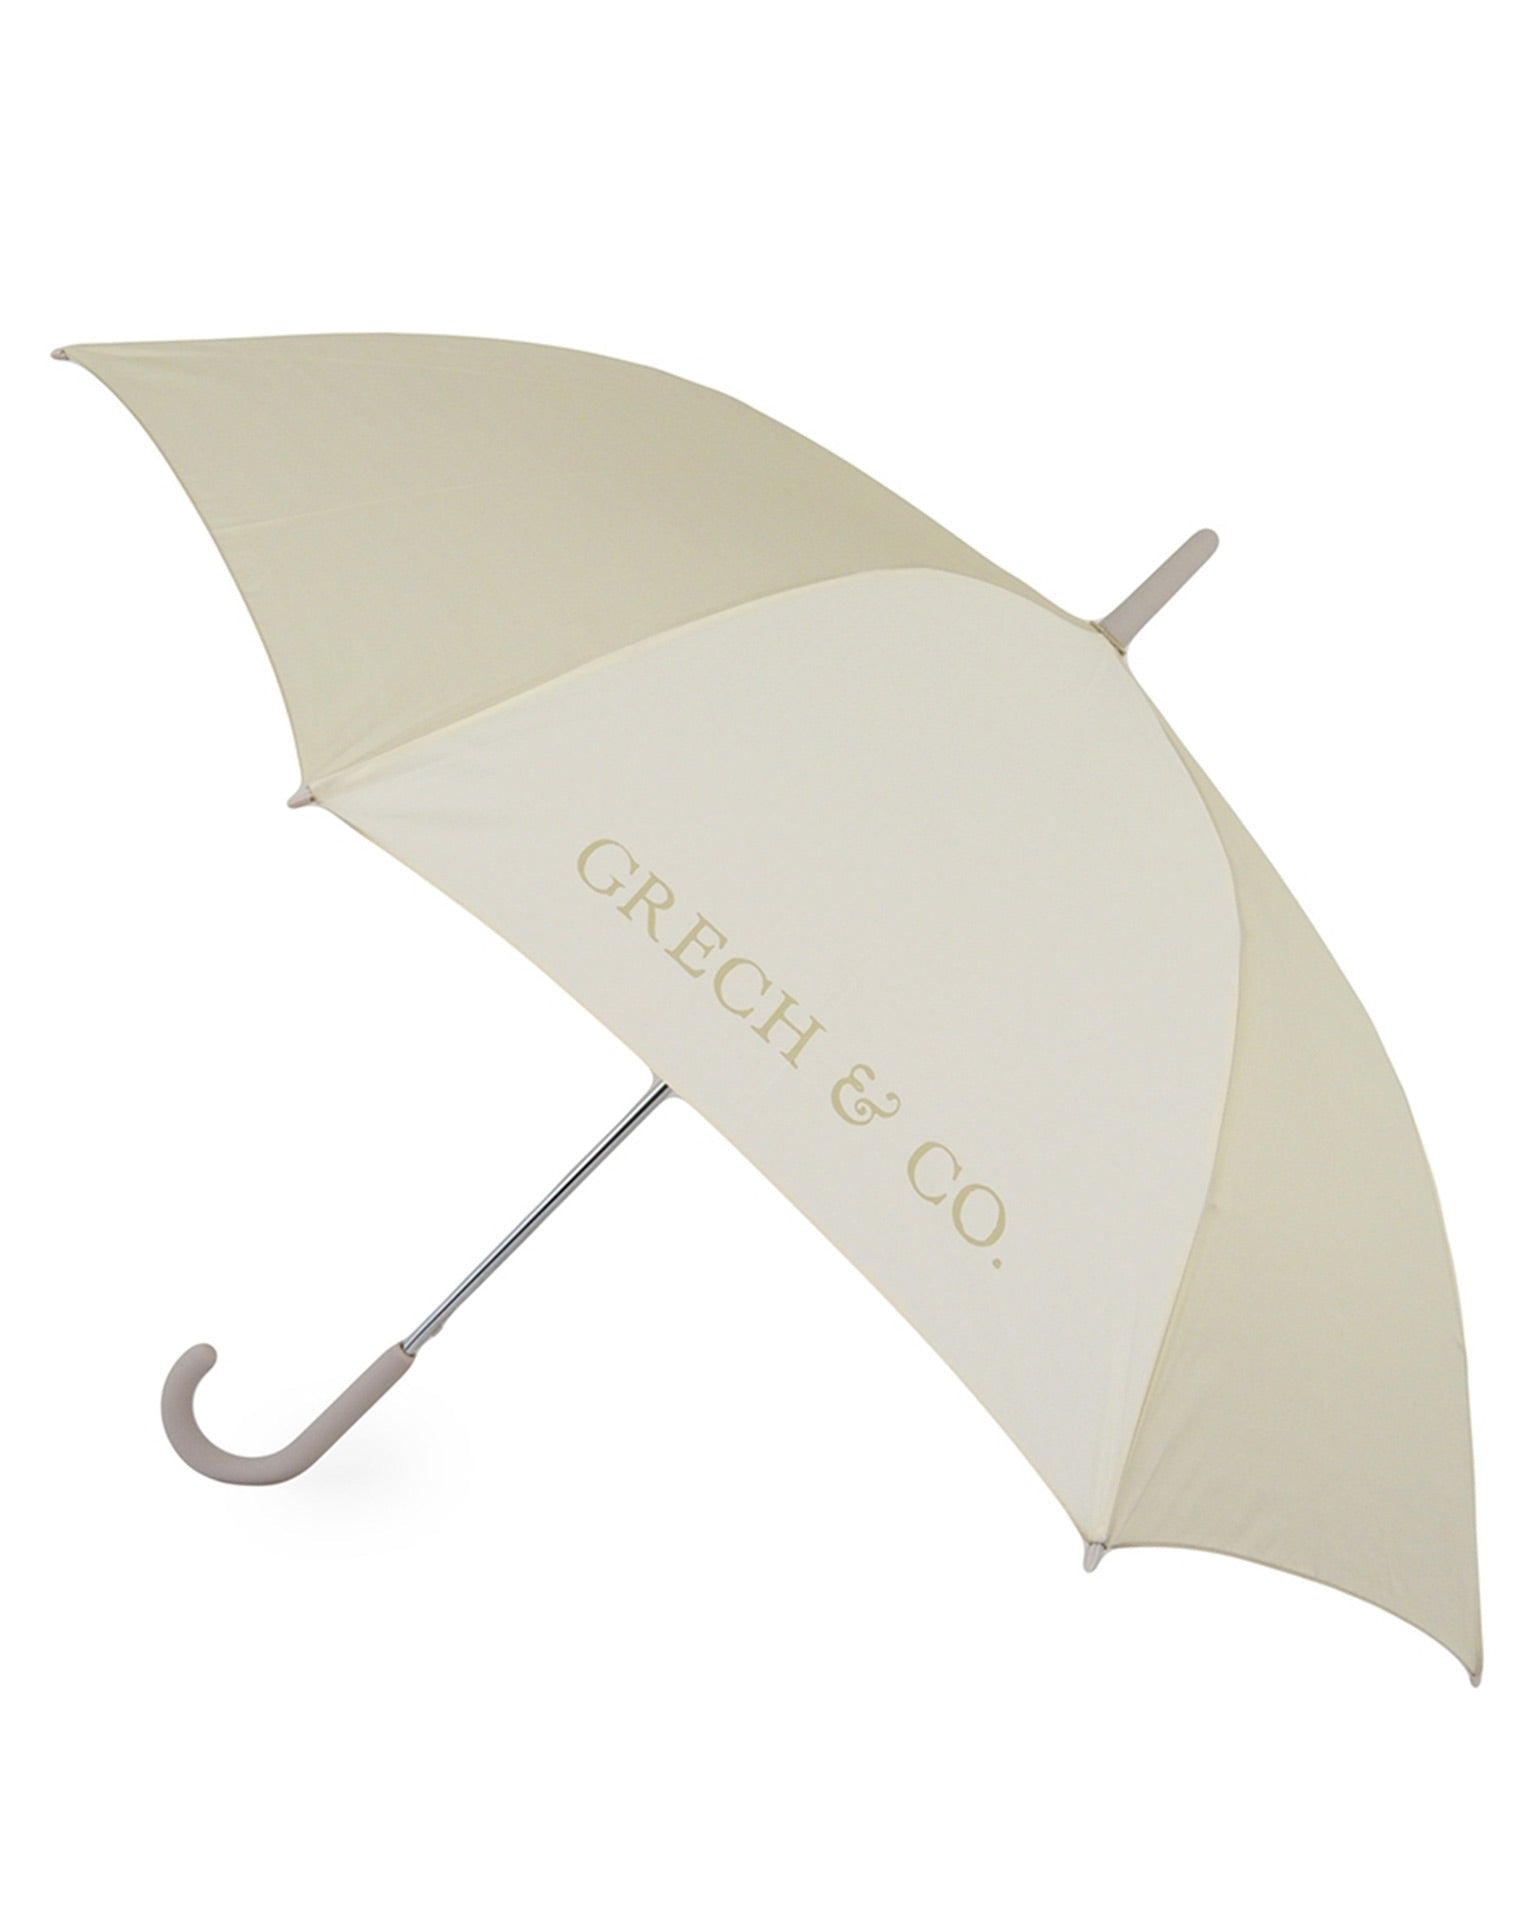 Little grech + co accessories adult umbrella in atlas